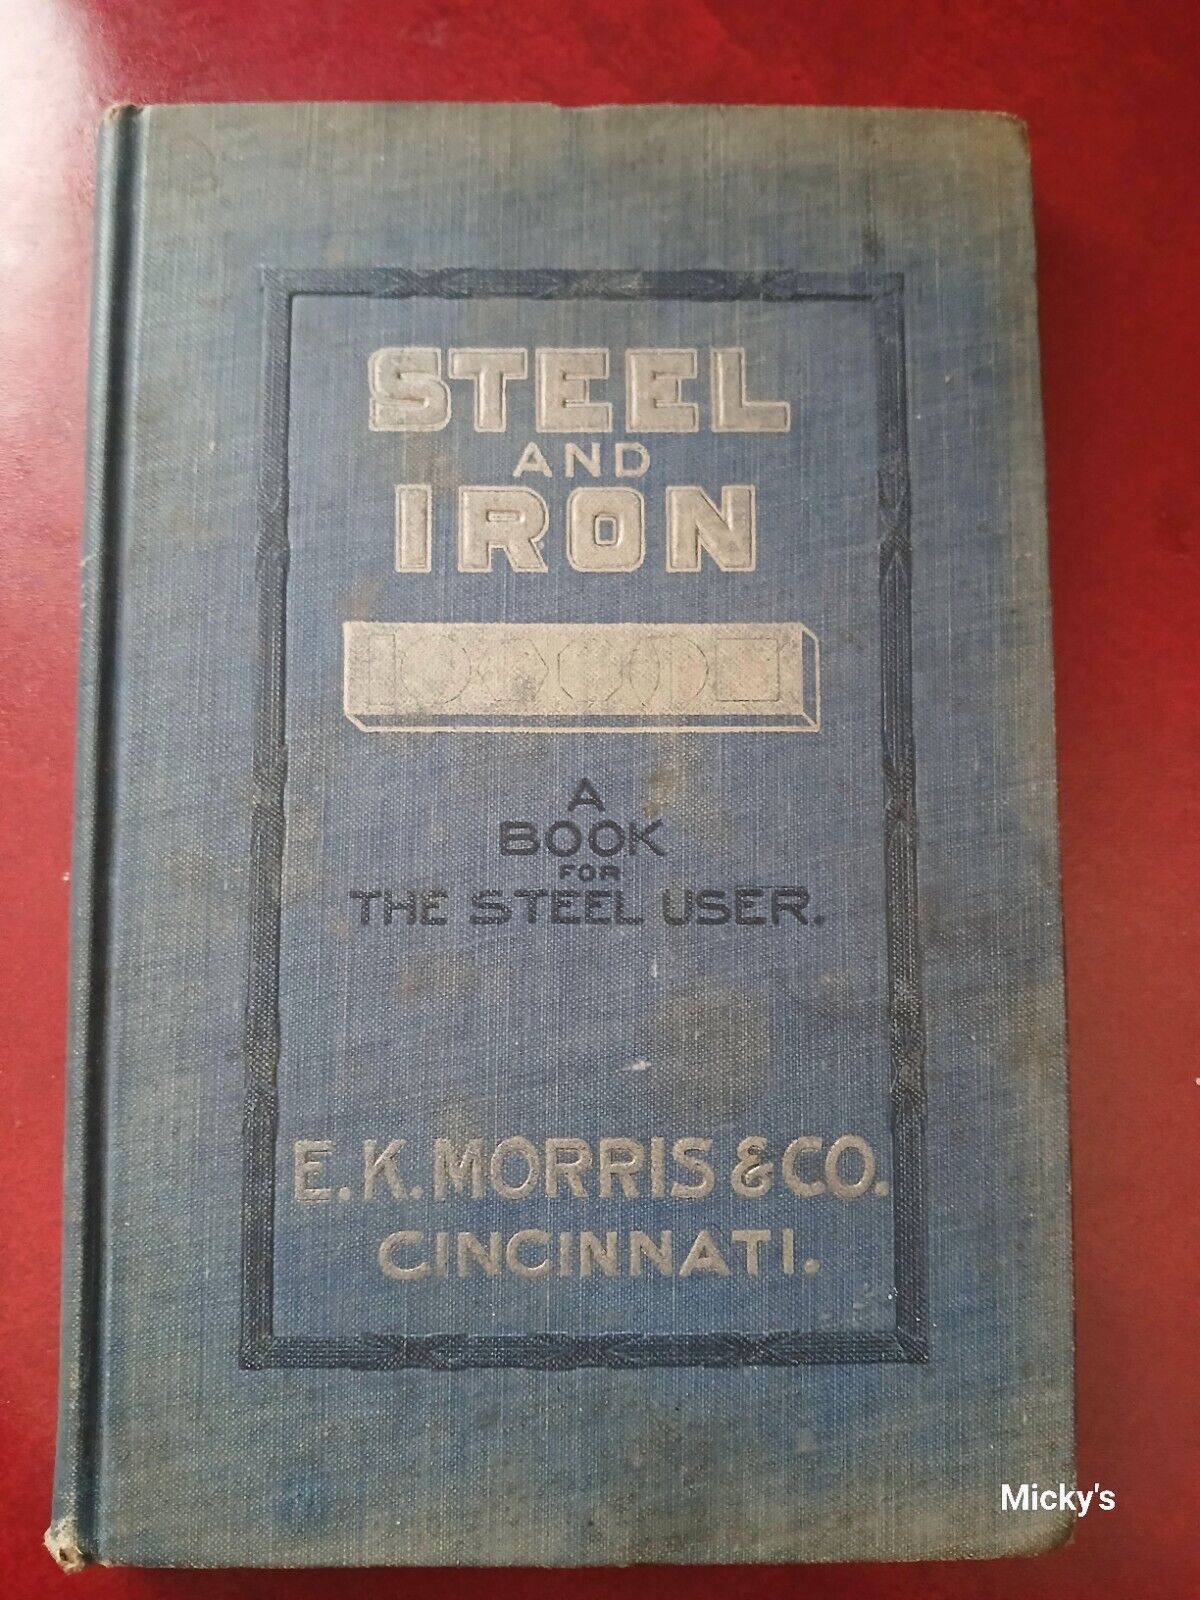 1916 Book Of Iron & Steel. A Manual For Steelwork. E.K. Morris & Co. Cincinnati